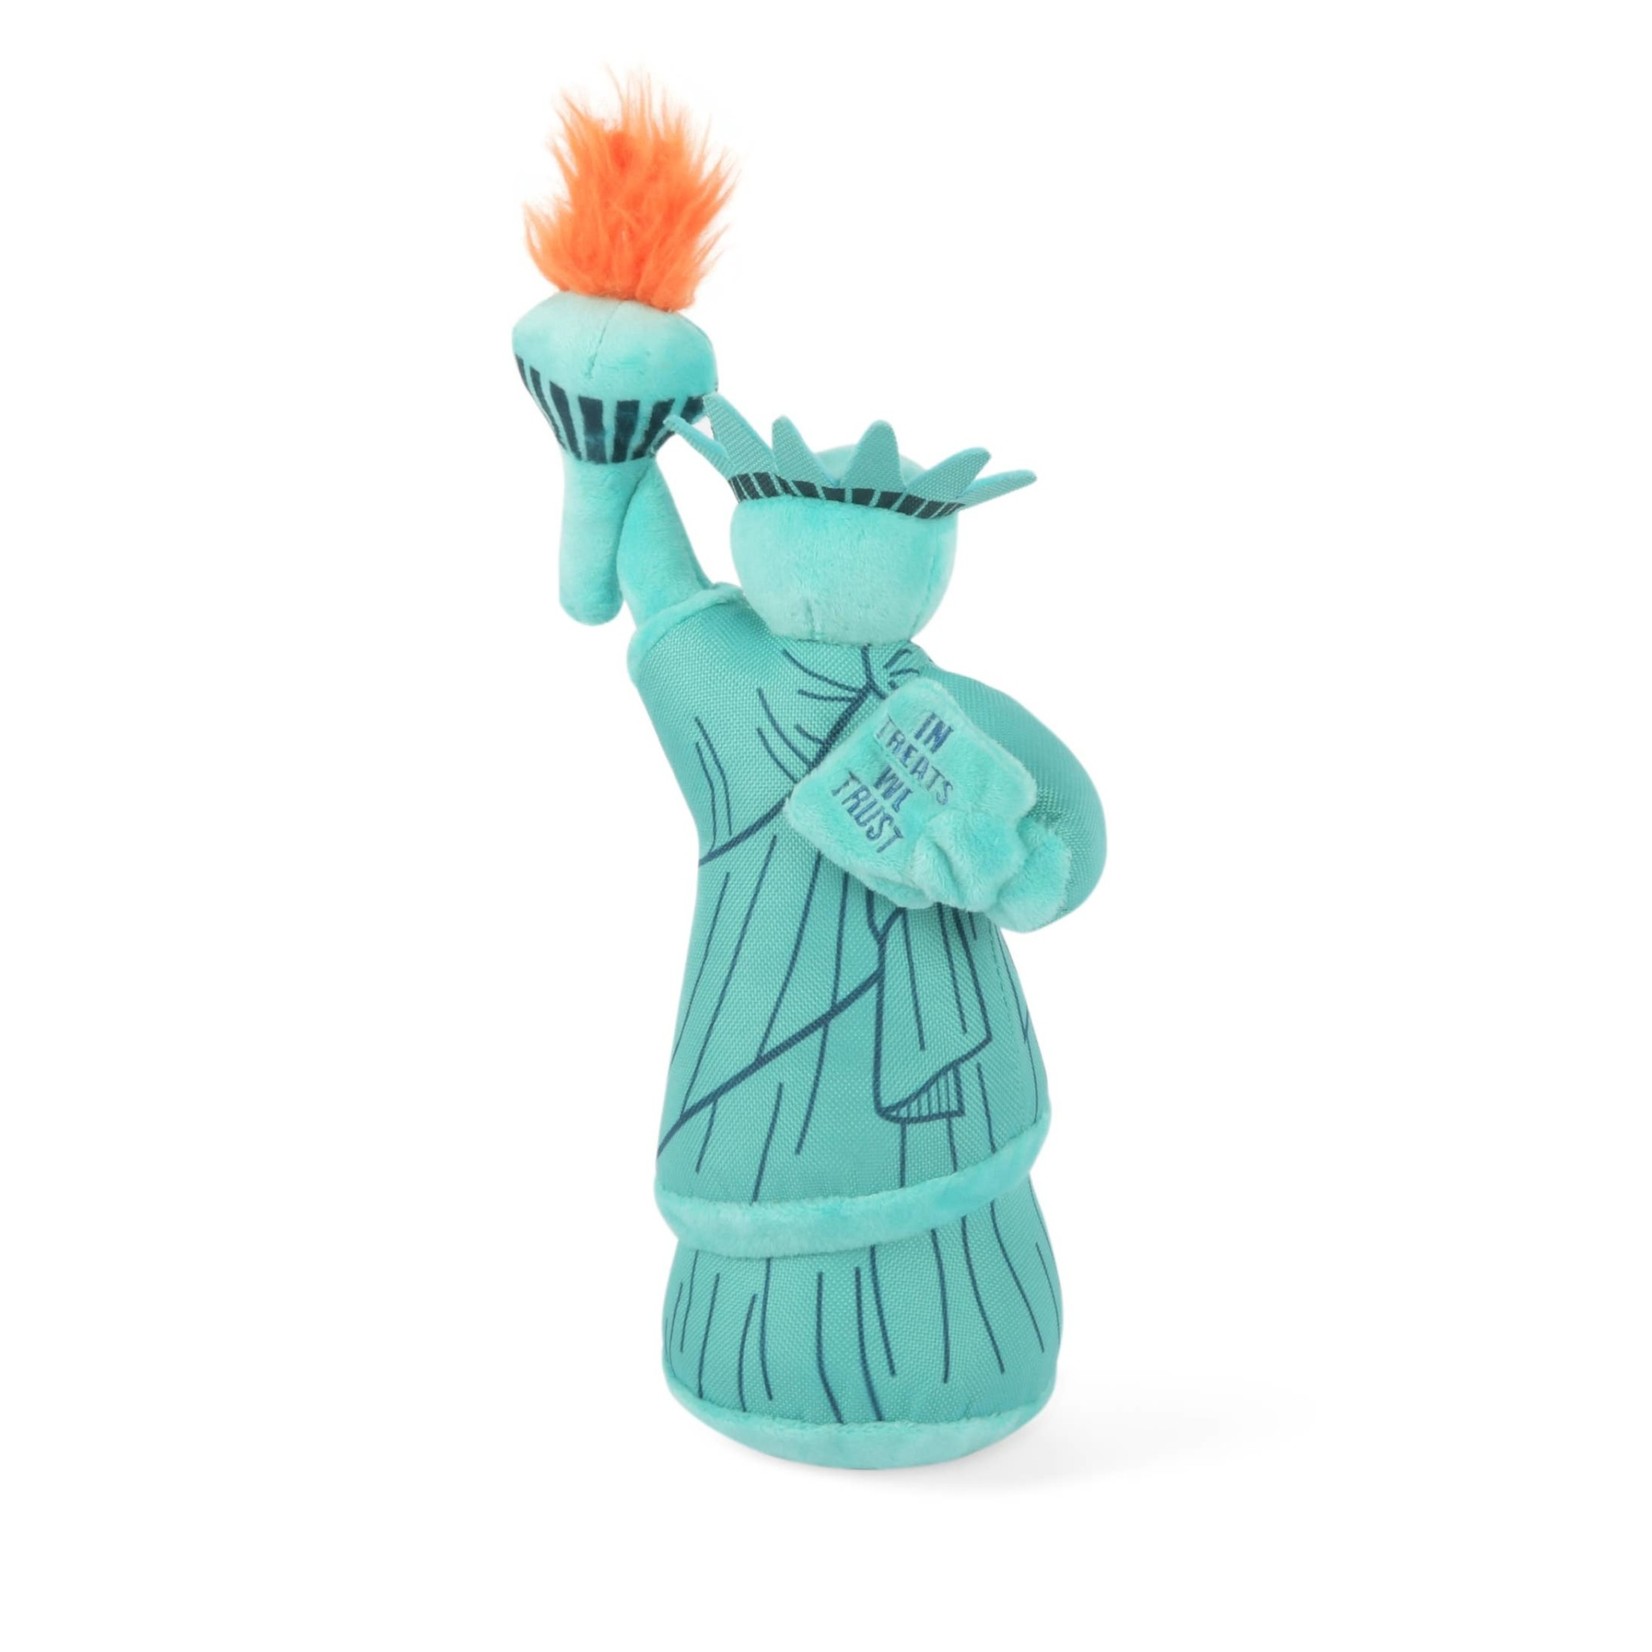 PLAY PLAY MINI NYC Lady Liberty